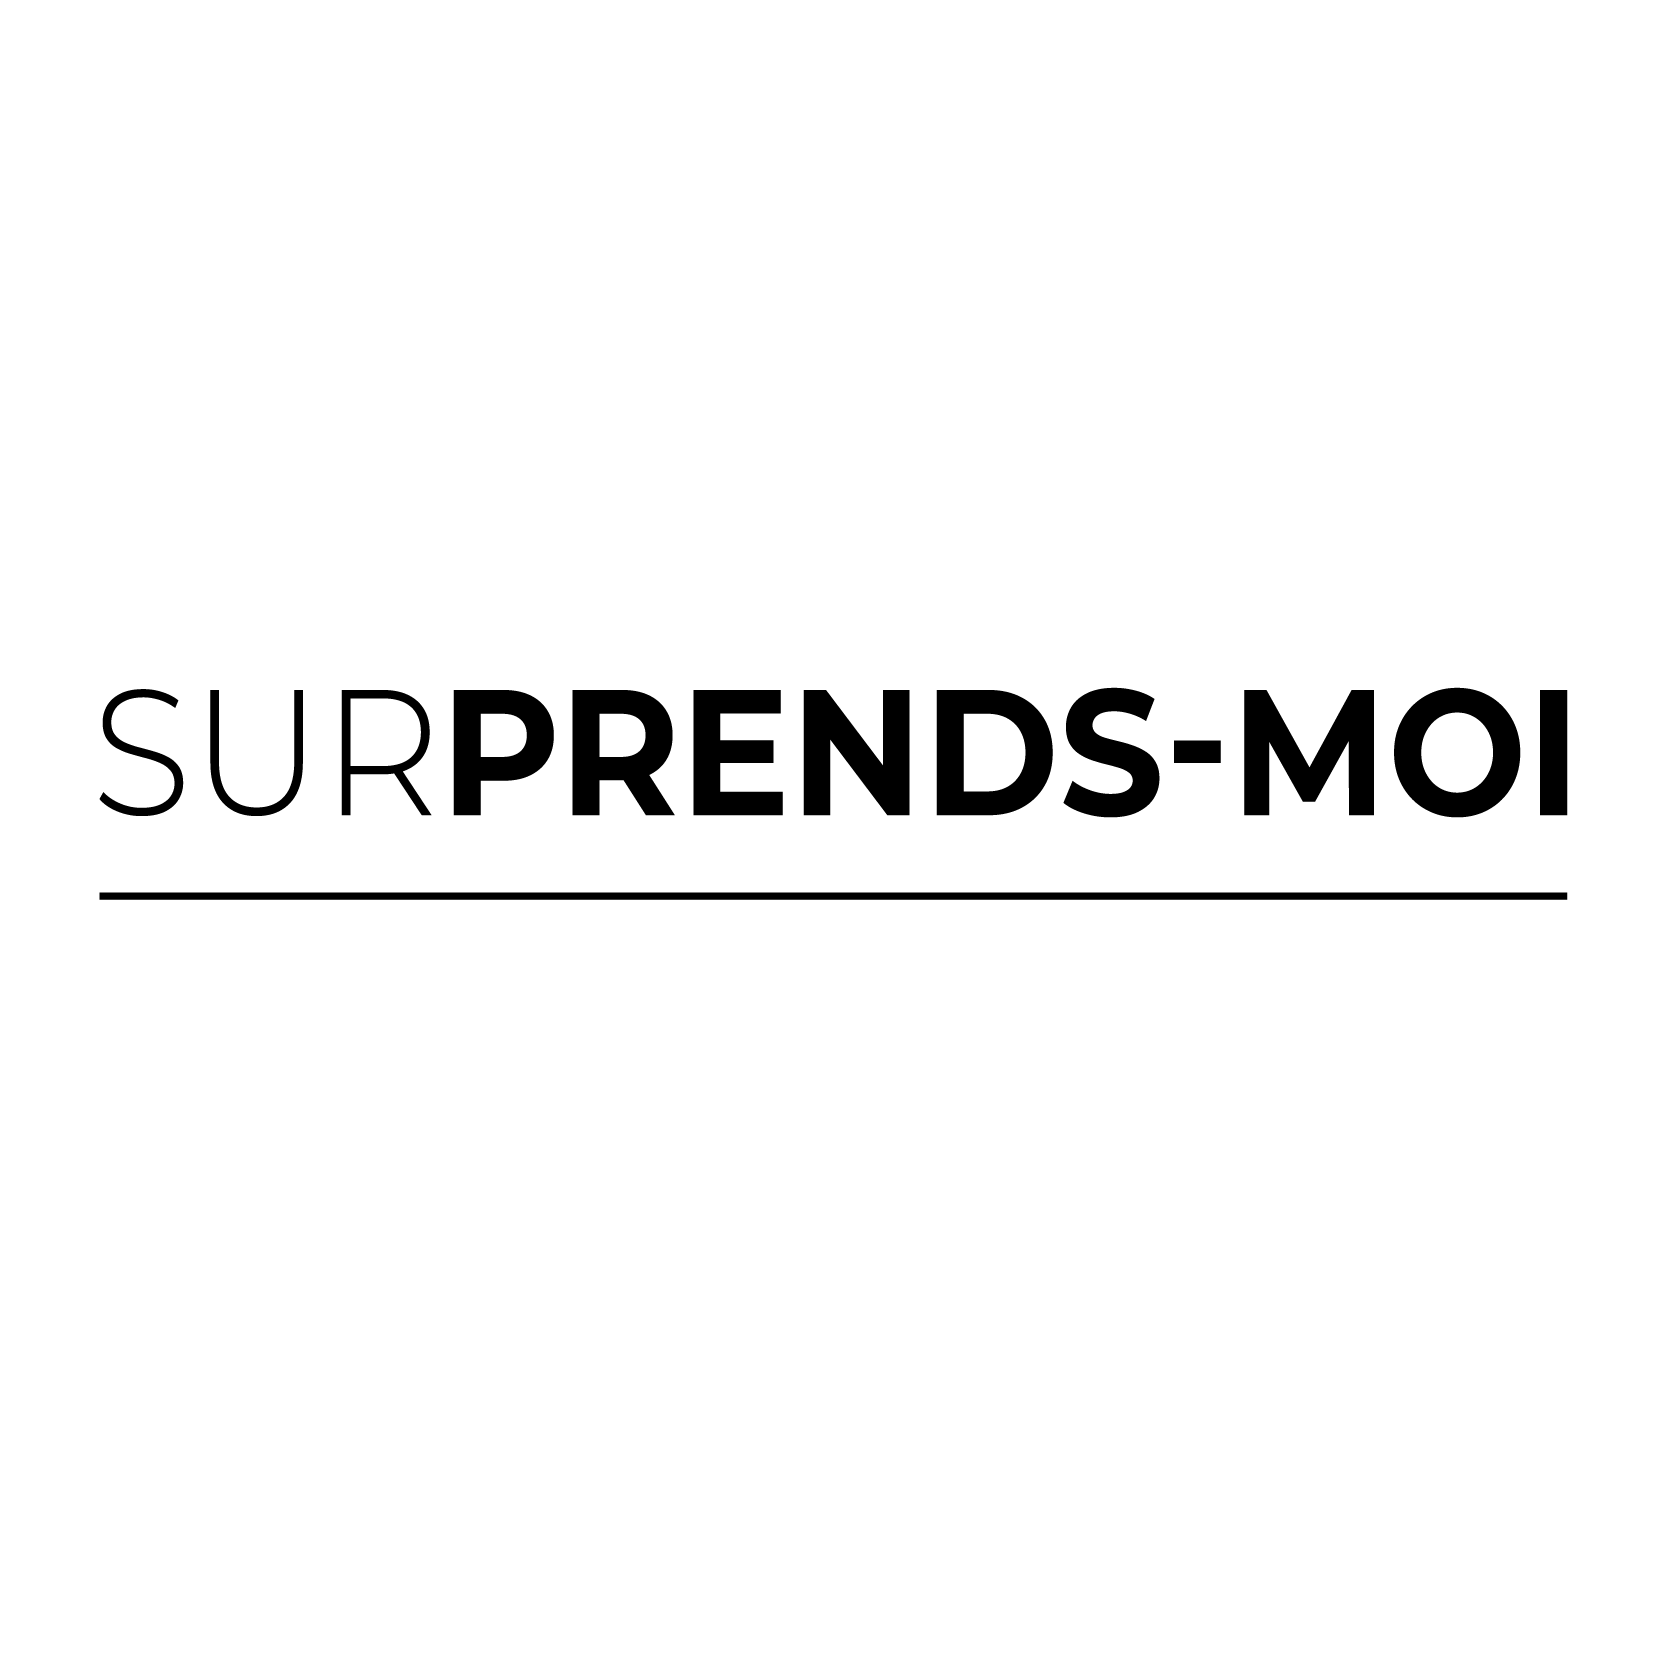 SURPRENDS-MOI